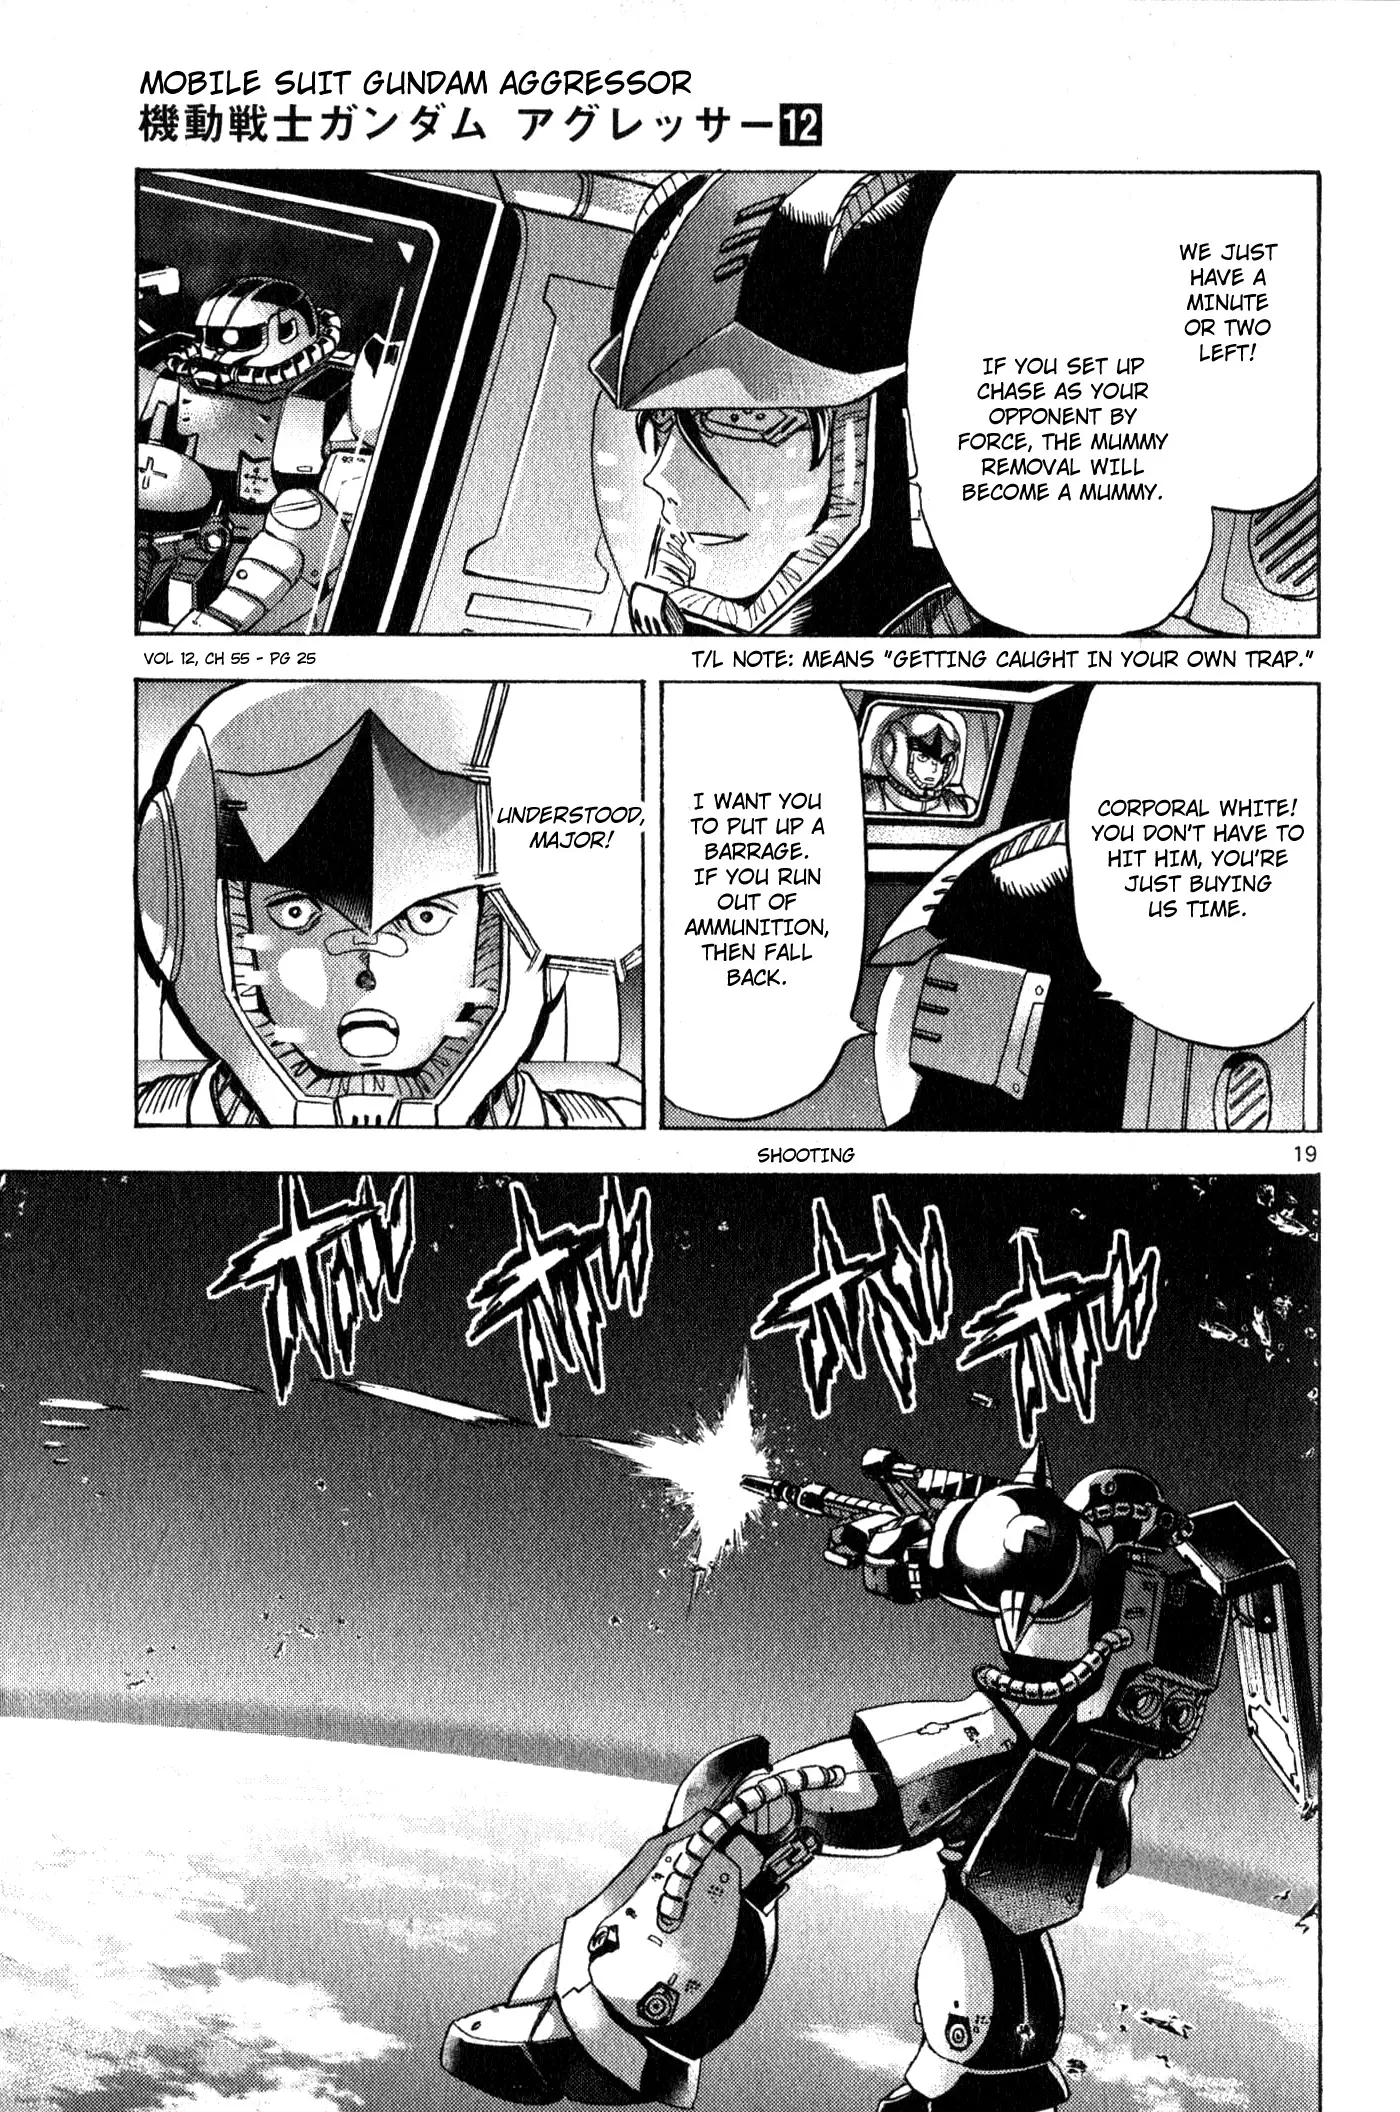 Mobile Suit Gundam Aggressor - 55 page 19-28c1bcbe